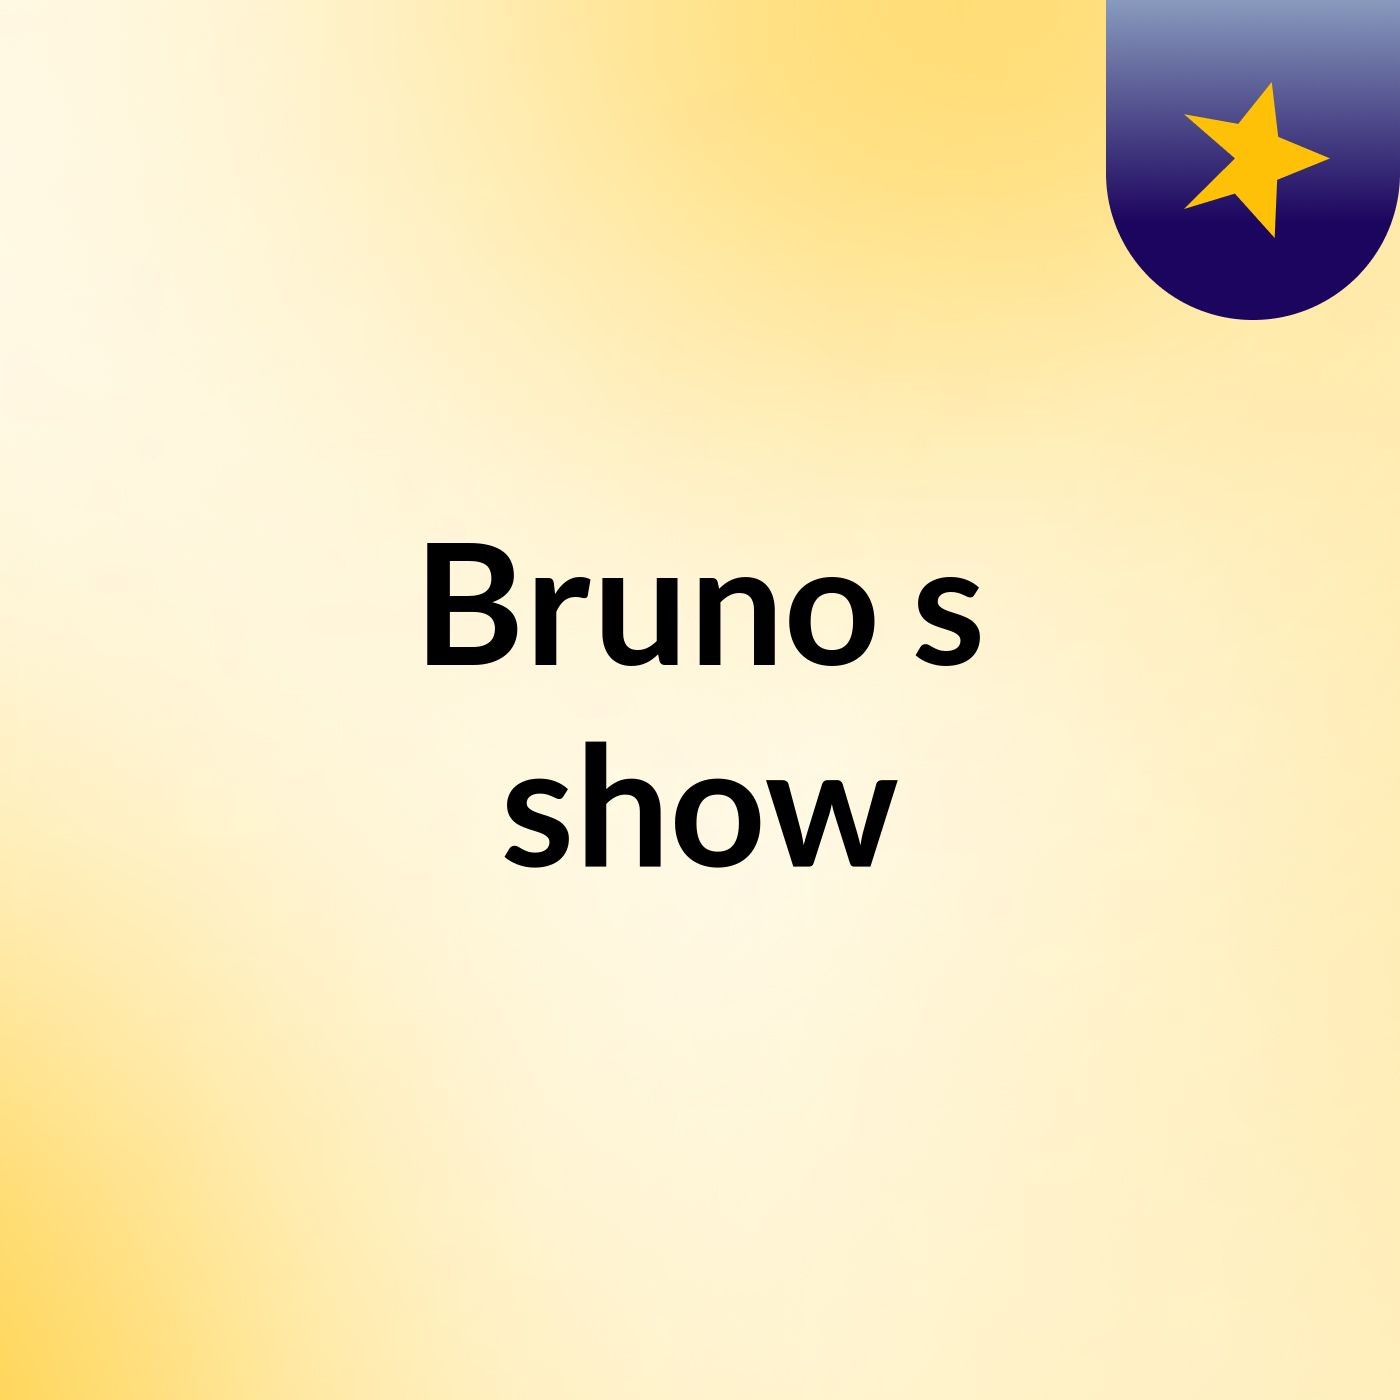 Bruno's show